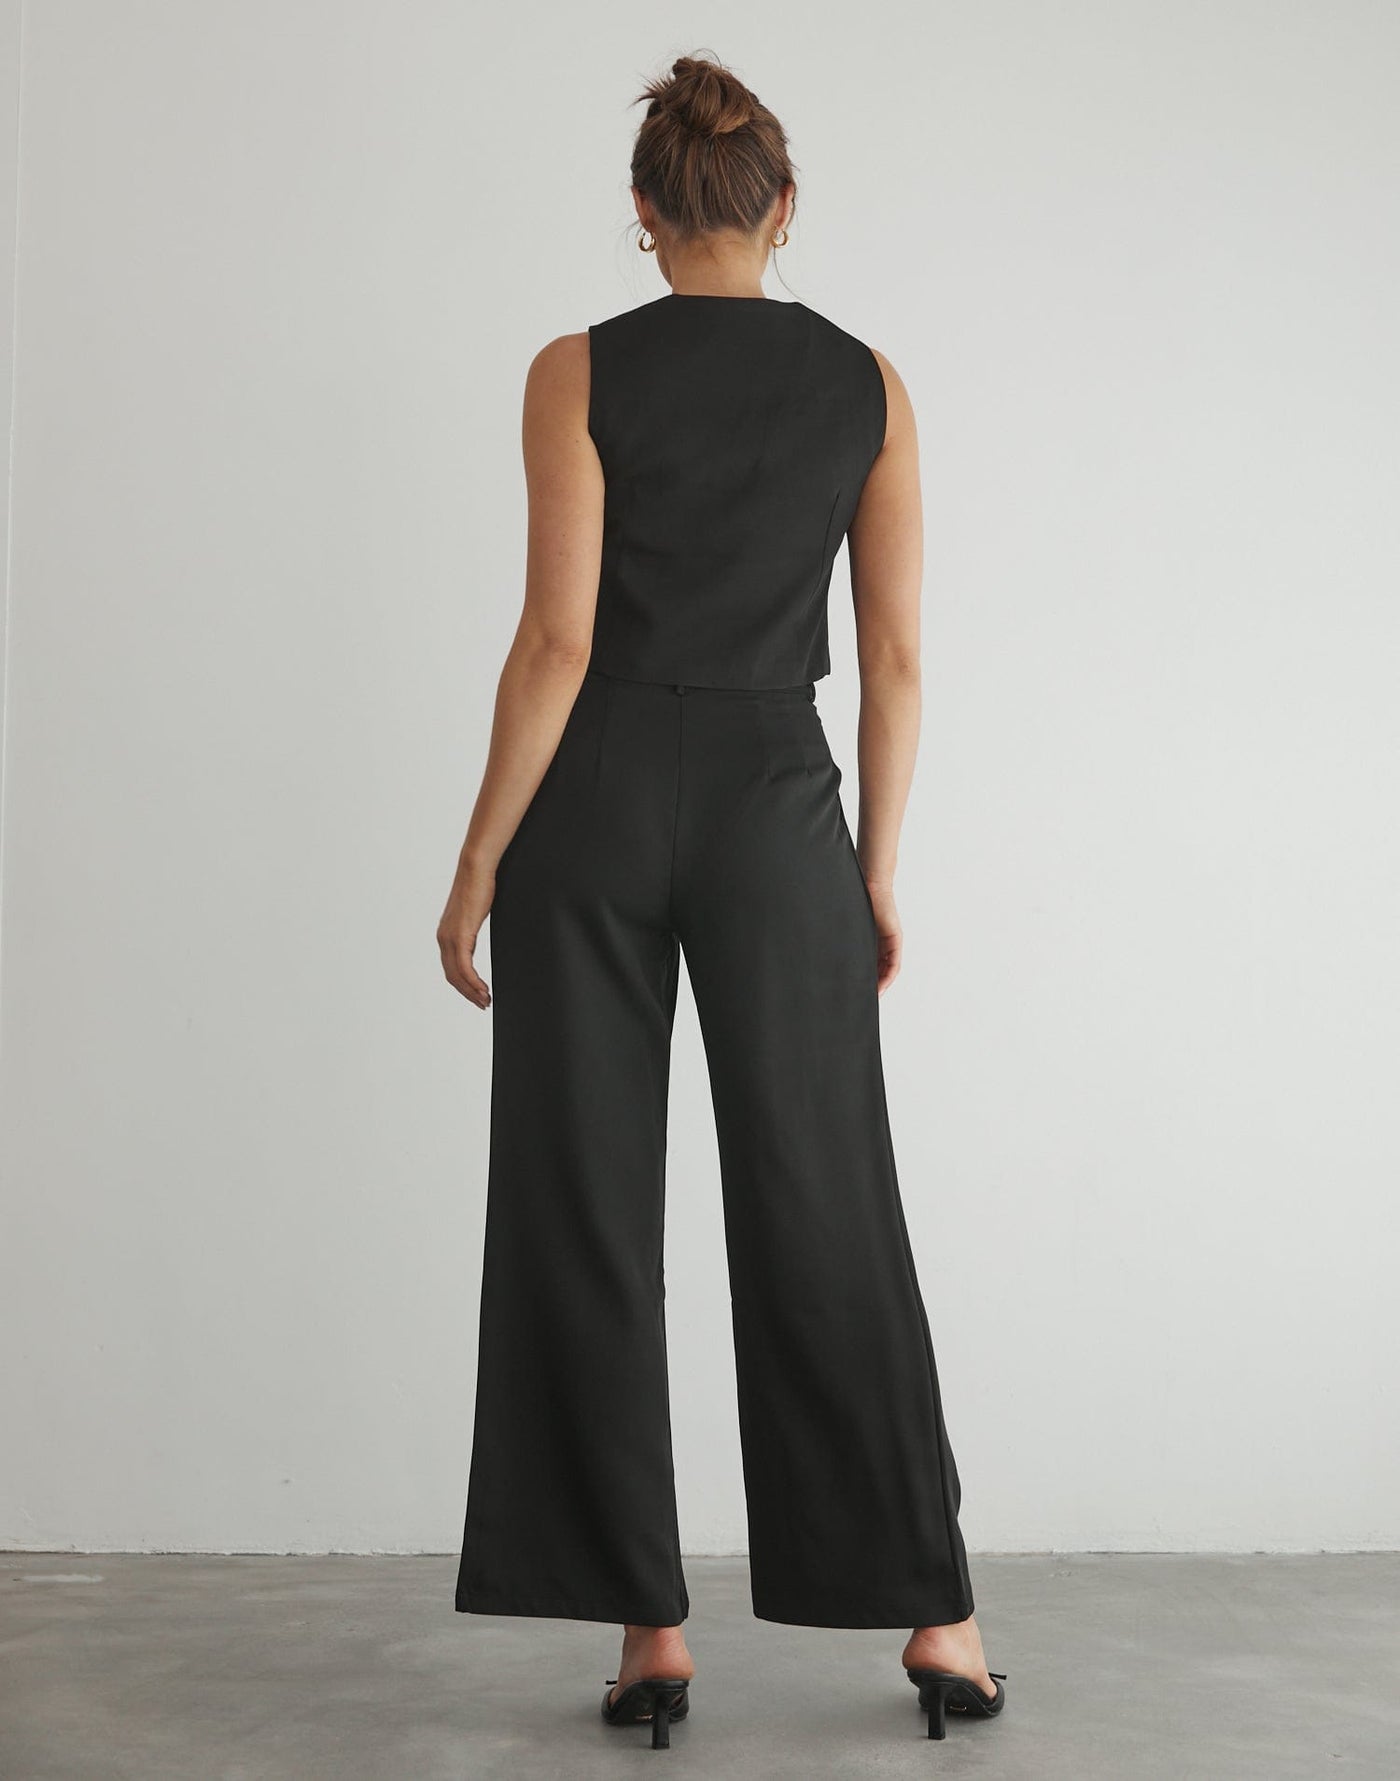 Dahlia Pants (Black) - Black Tailored Pants - Women's Pants - Charcoal Clothing